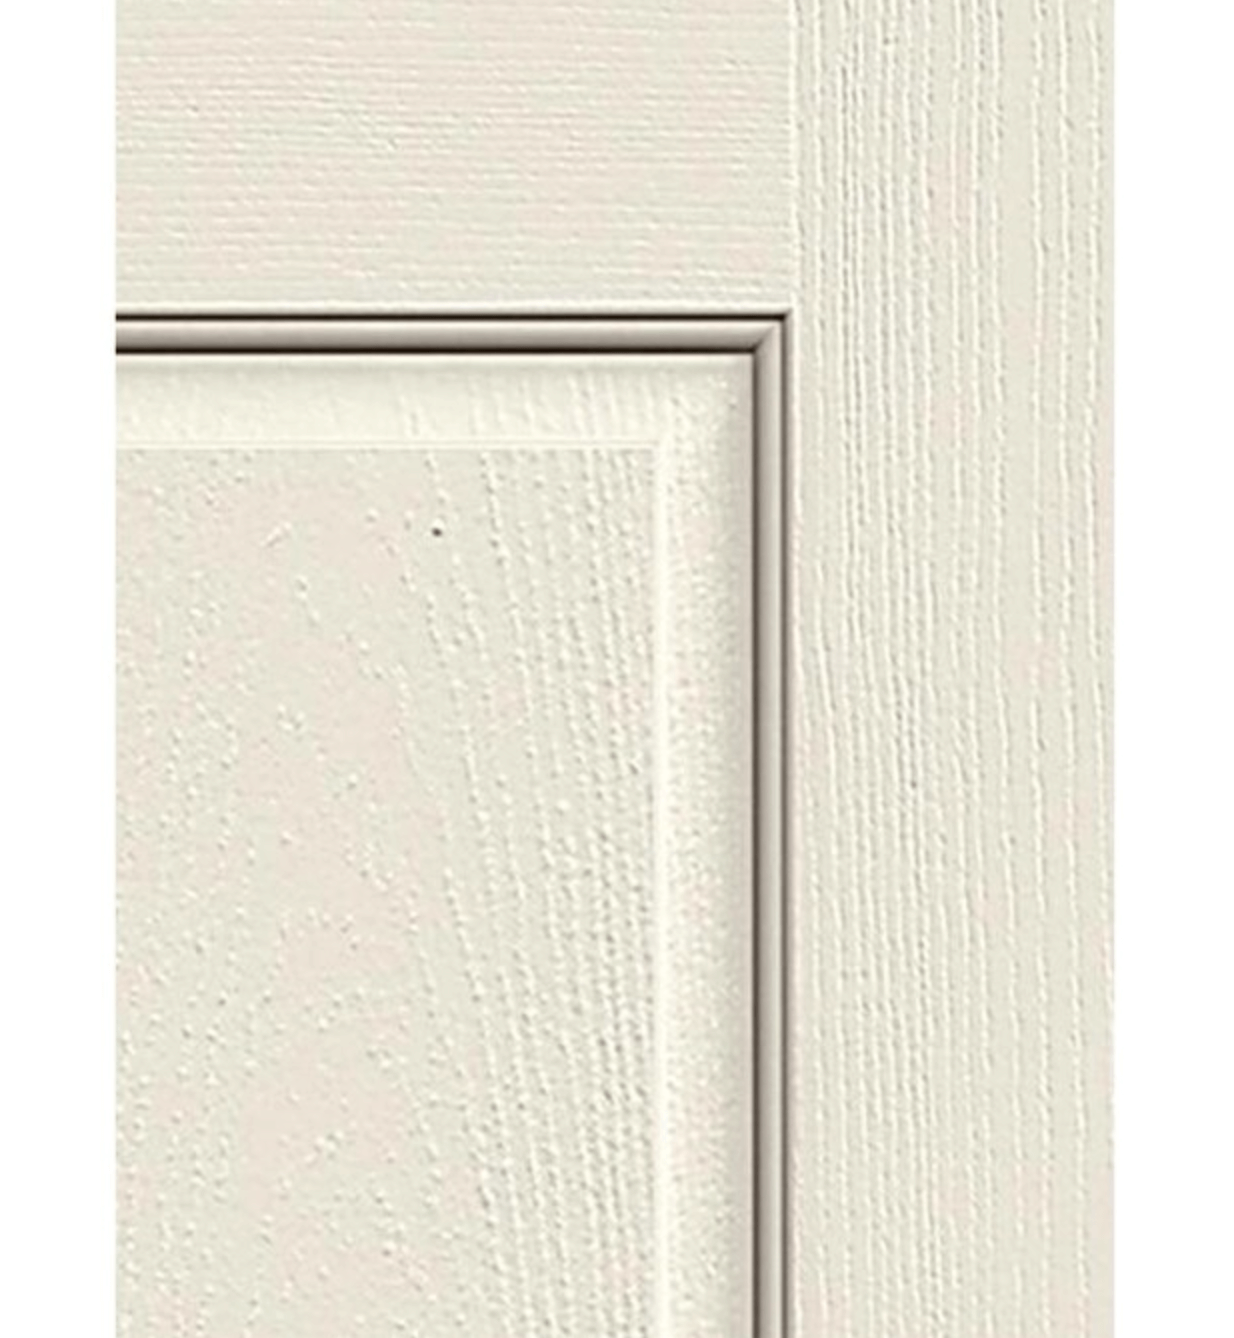 Colonist 32" x 80" Single Prehung Interior Door Unit - Primed 6-Panel Hollow Core Right Hand